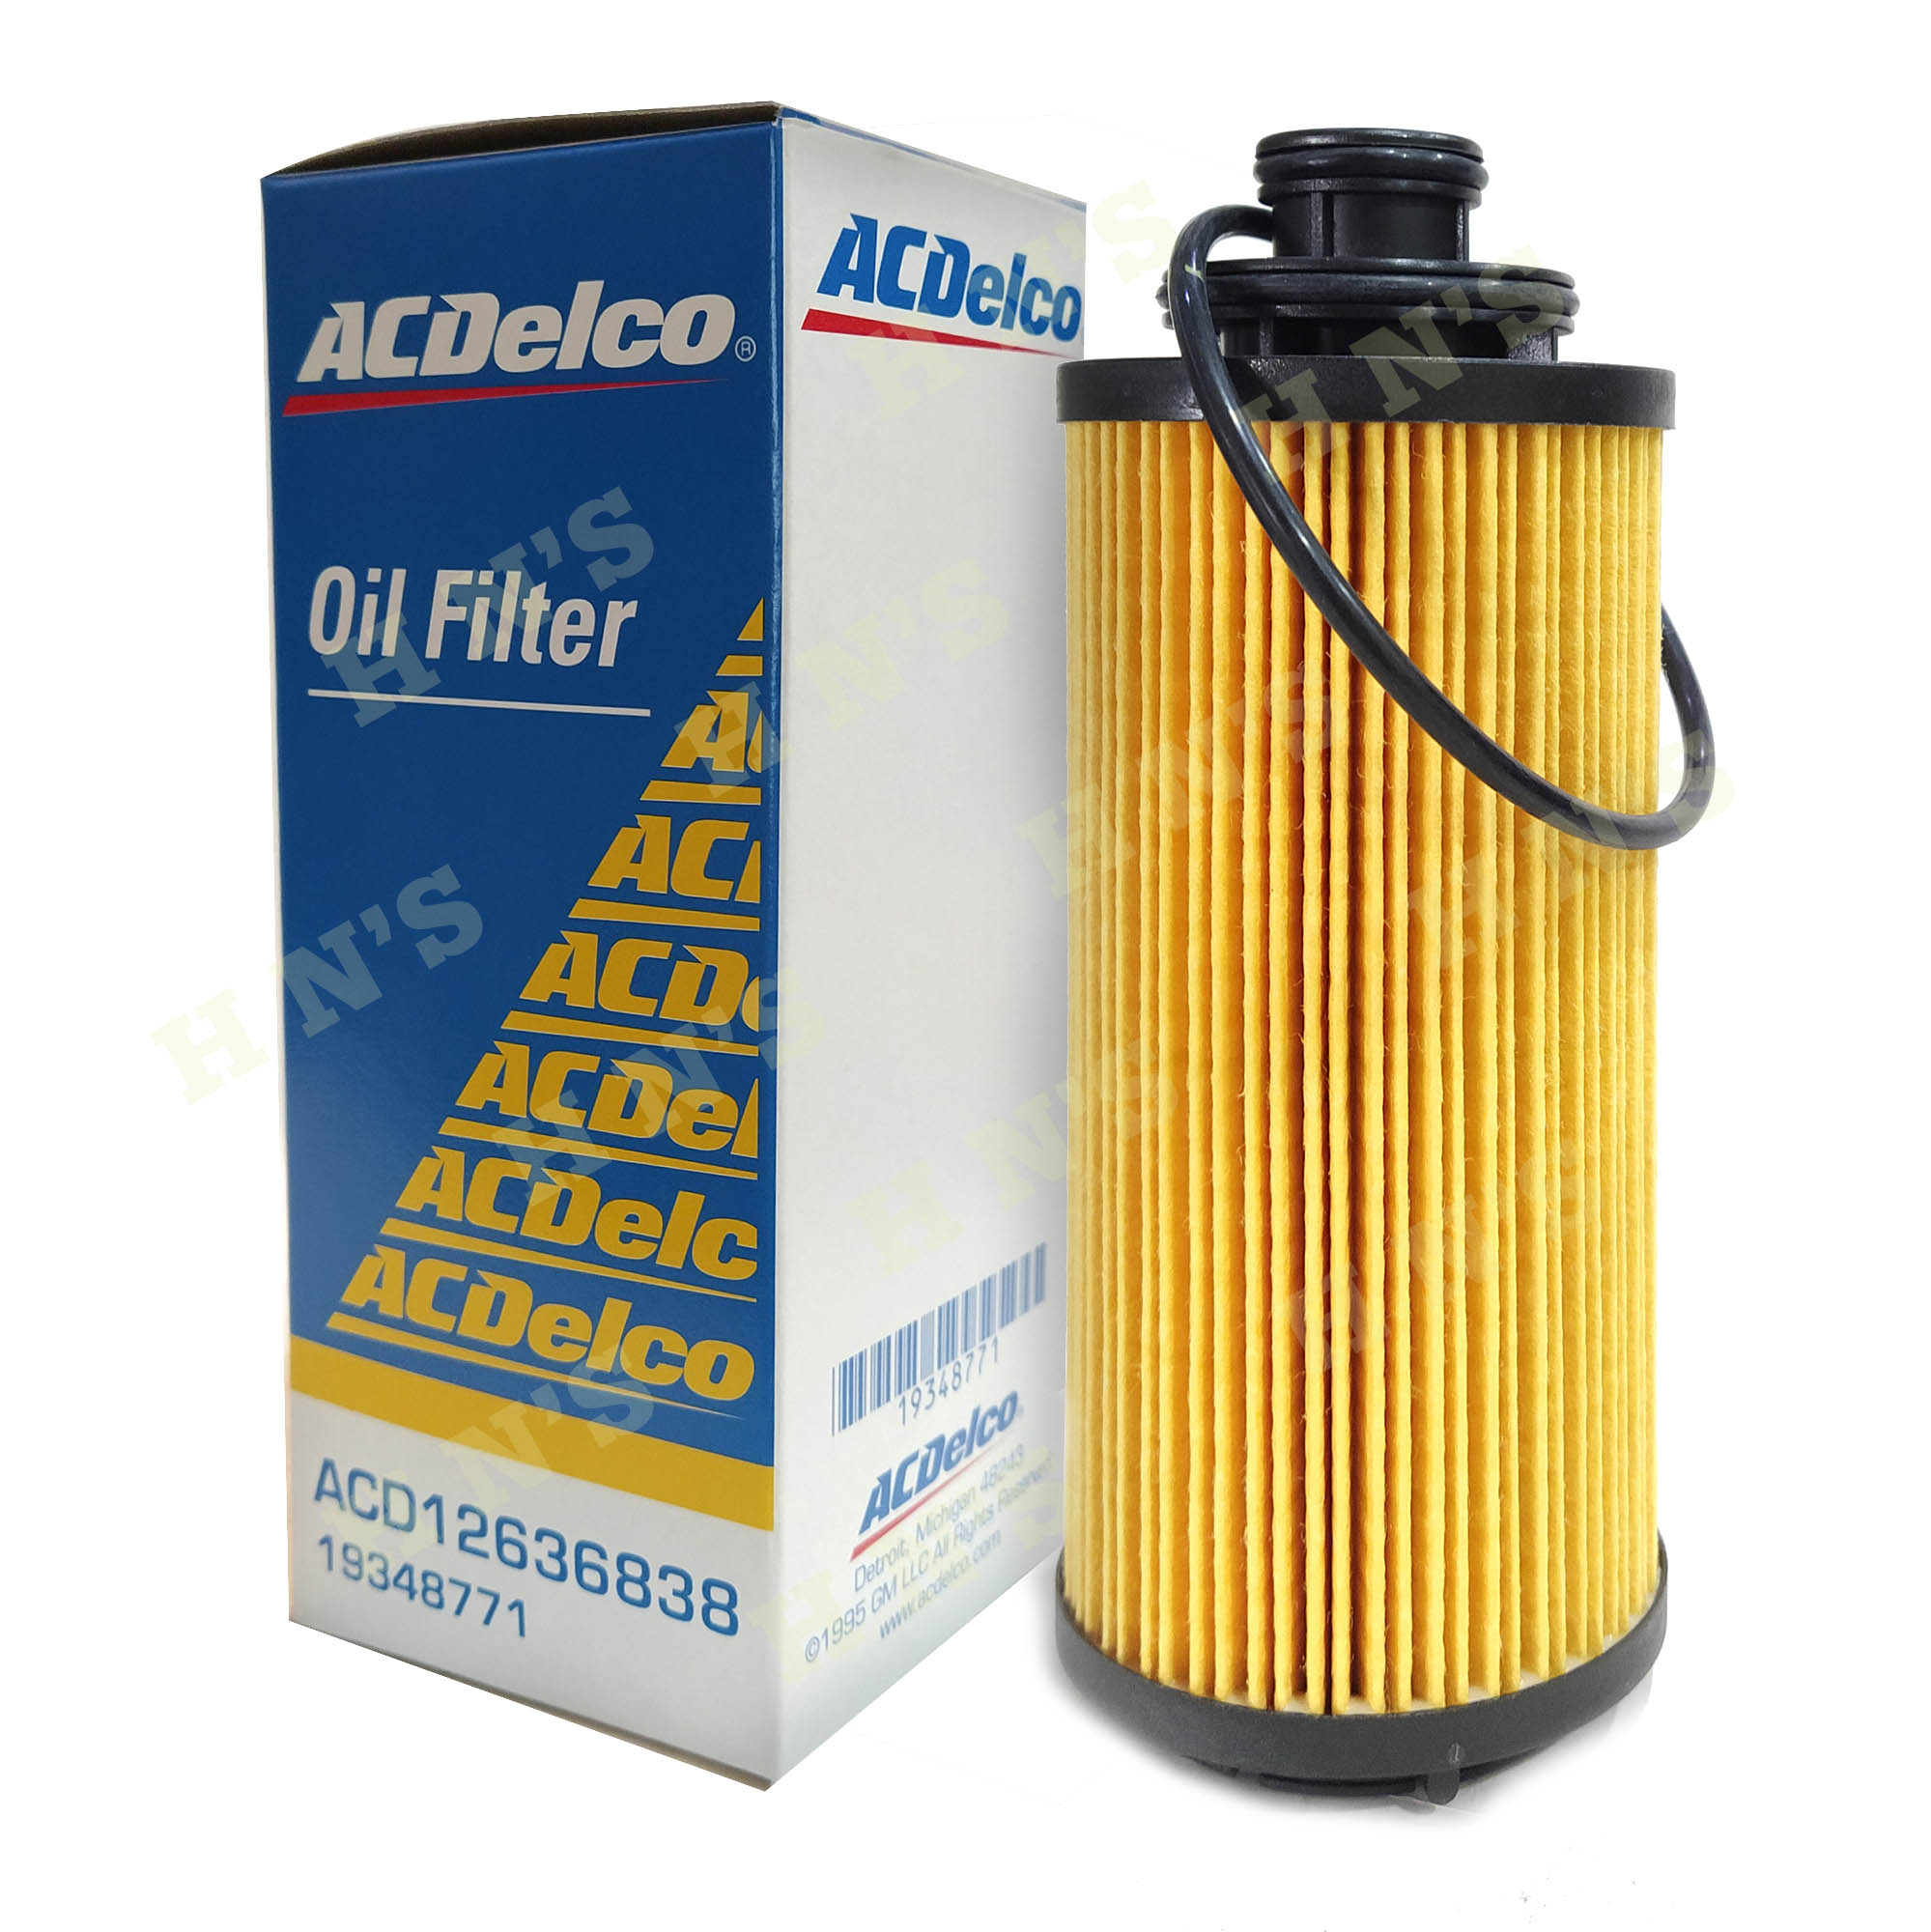 ACDelco Oil Filter for Chevrolet Trailblazer / Chevrolet Colorado